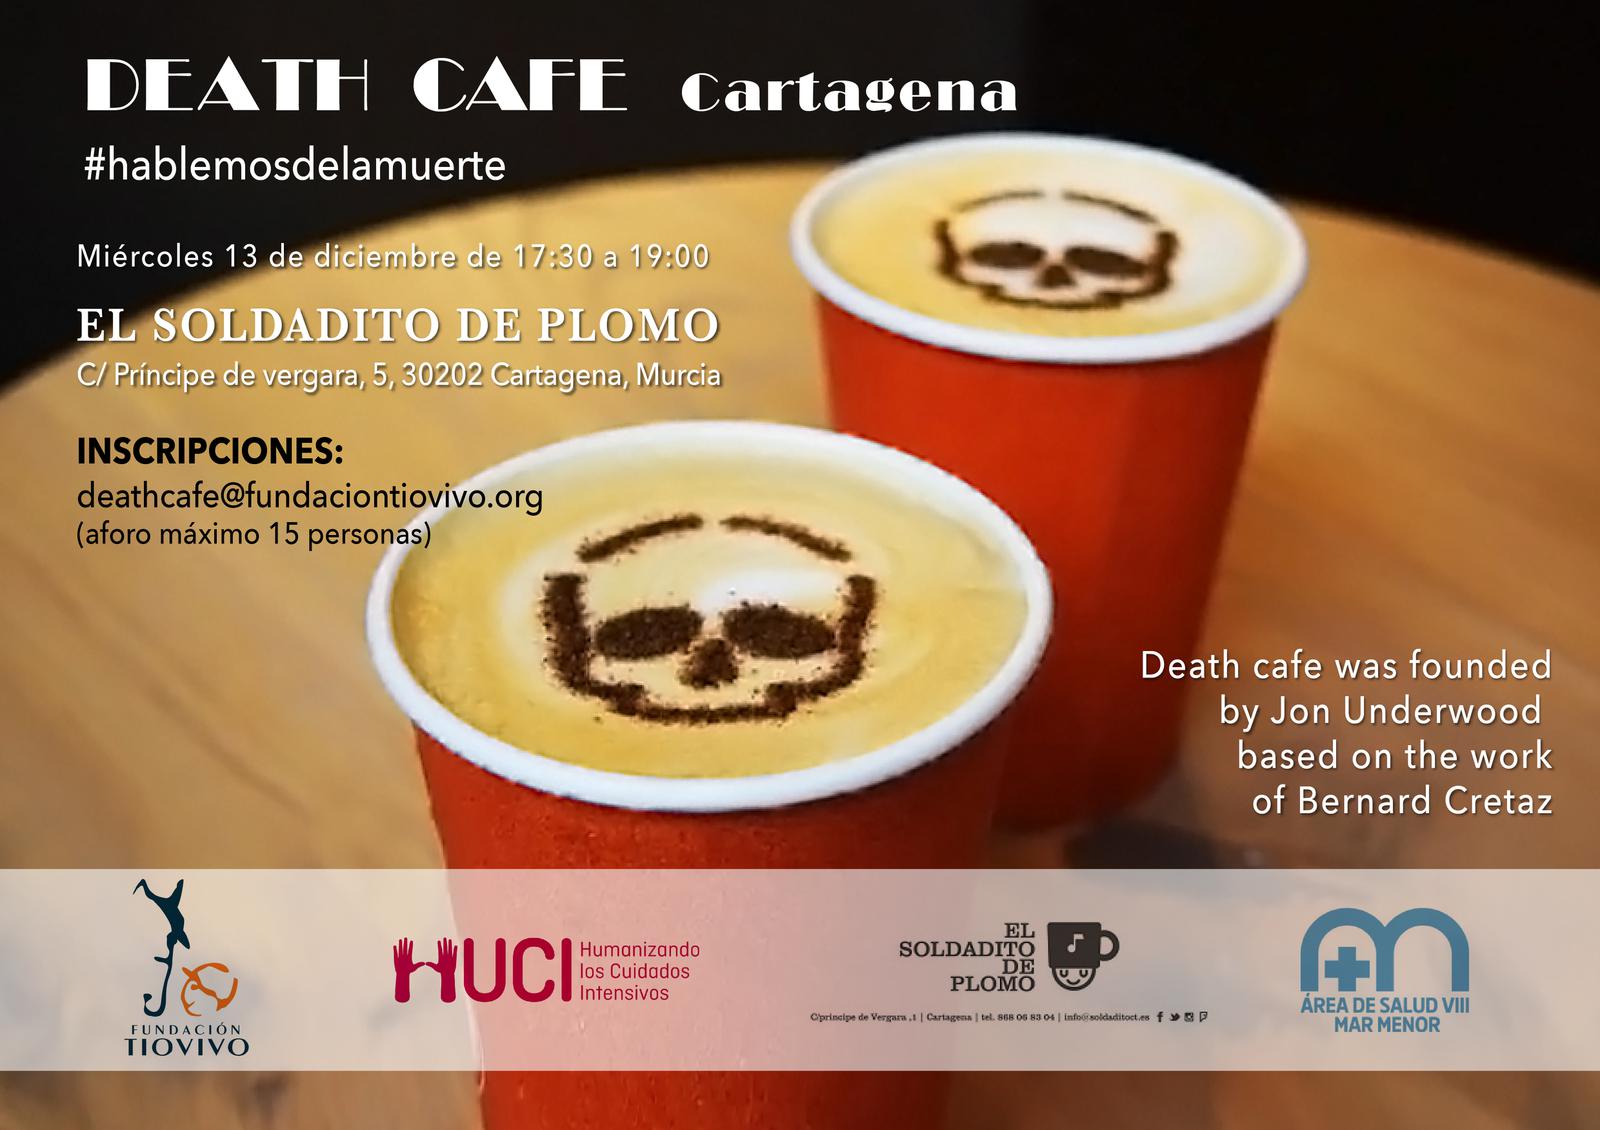 Death Cafe CARTAGENA (SPAIN)